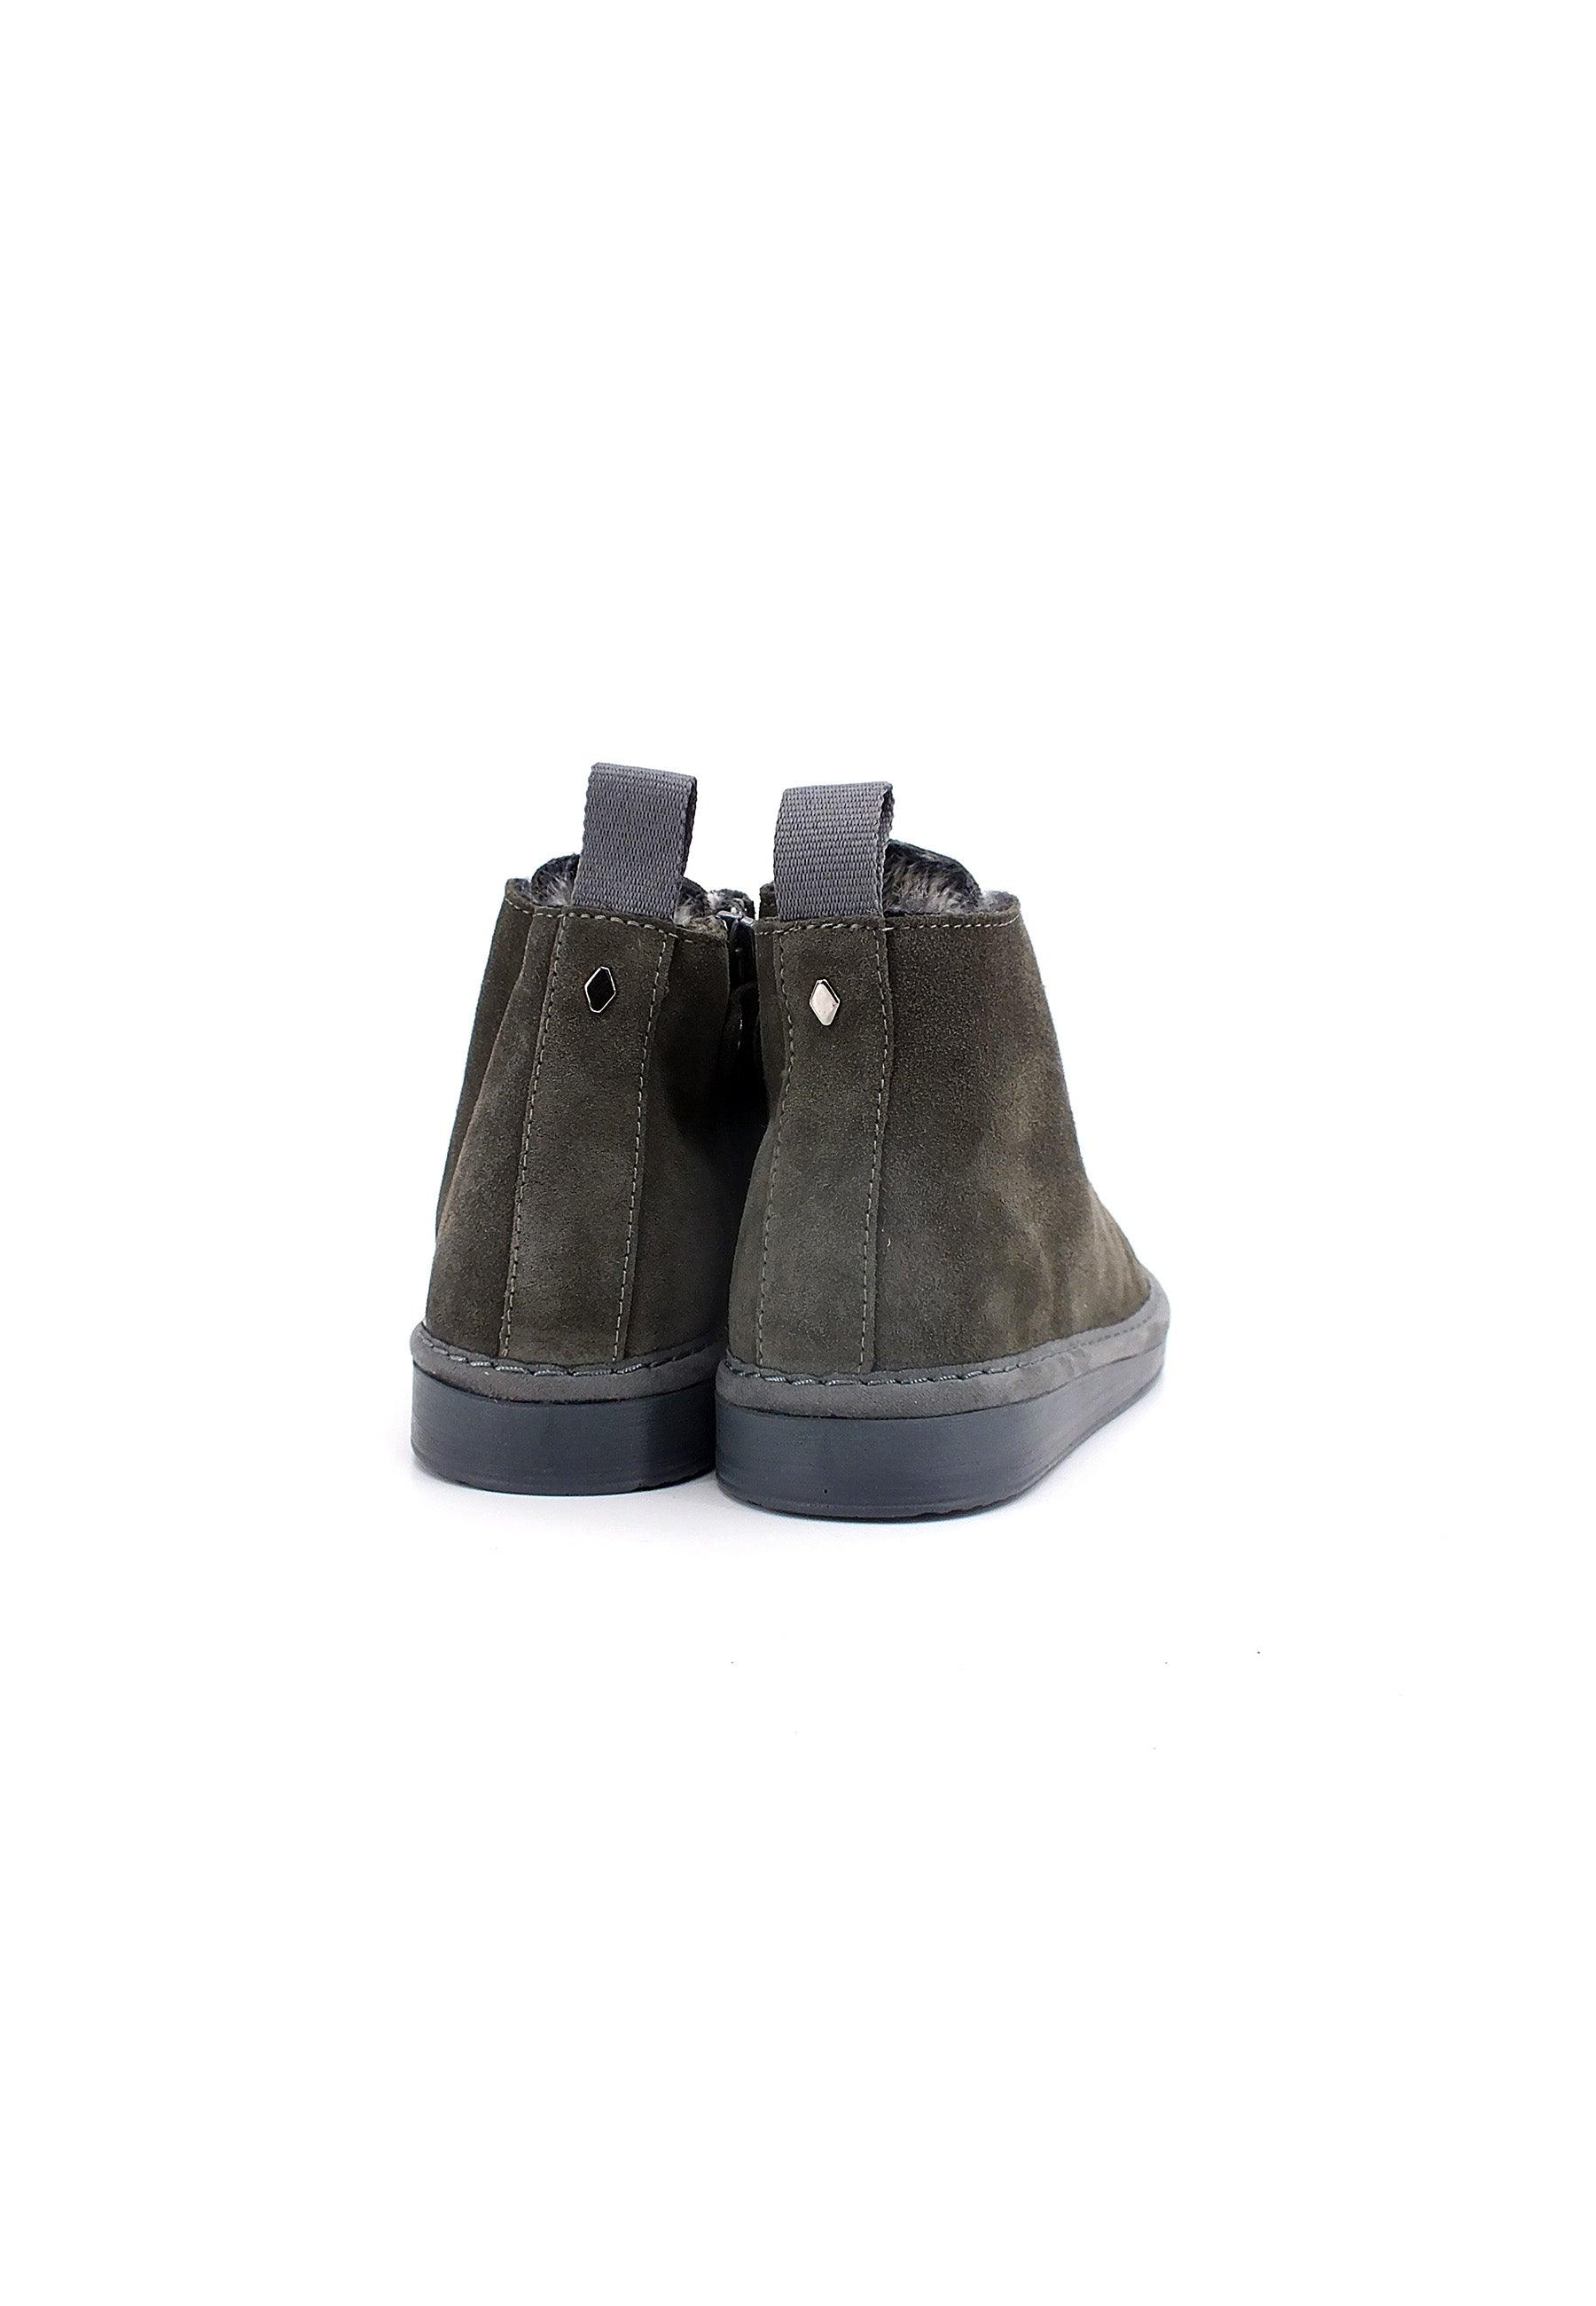 PAN CHIC Ankle Boot Sneaker Pelo Bimbo Khaki Walnut P01K1400200006 - Sandrini Calzature e Abbigliamento